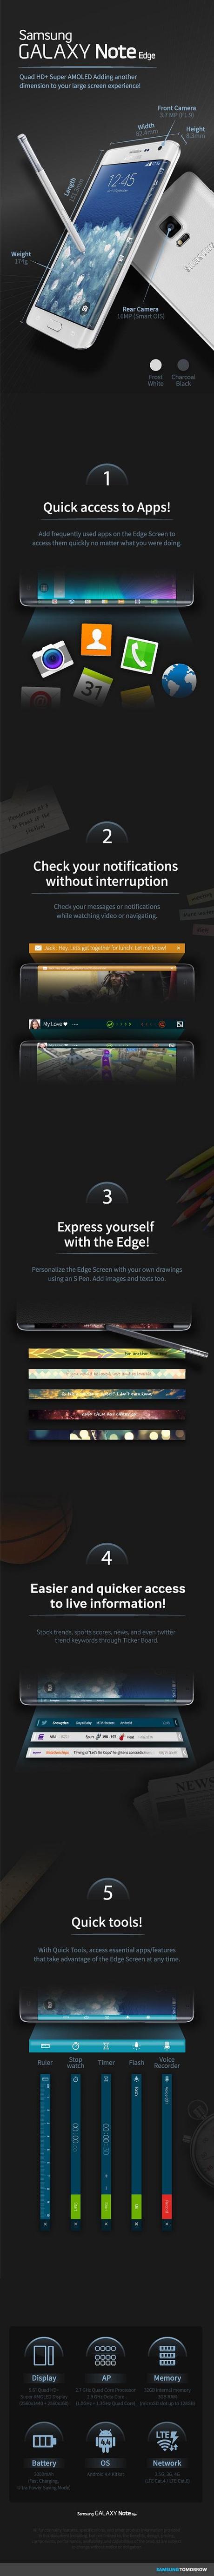 Infografica Galaxy Note Edge